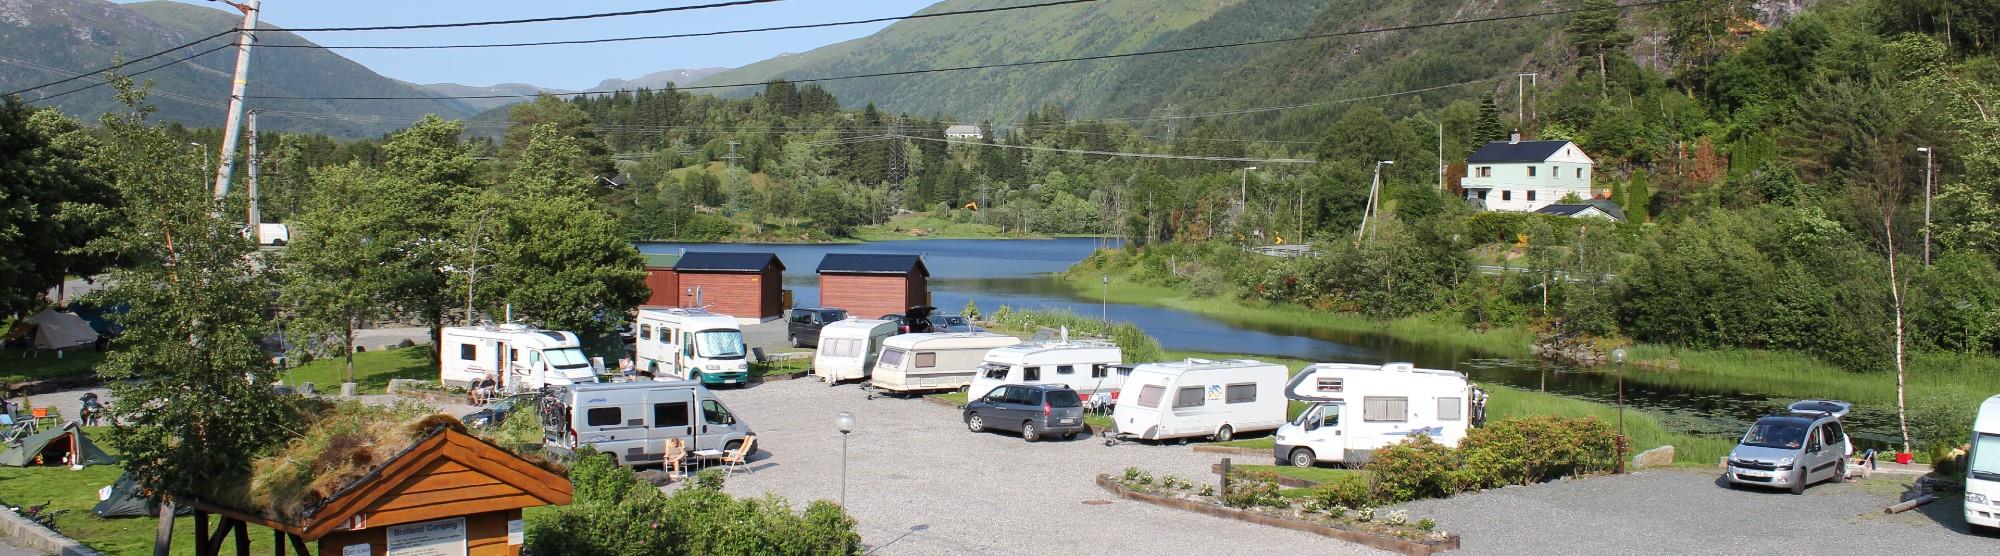 Camping in Bergen